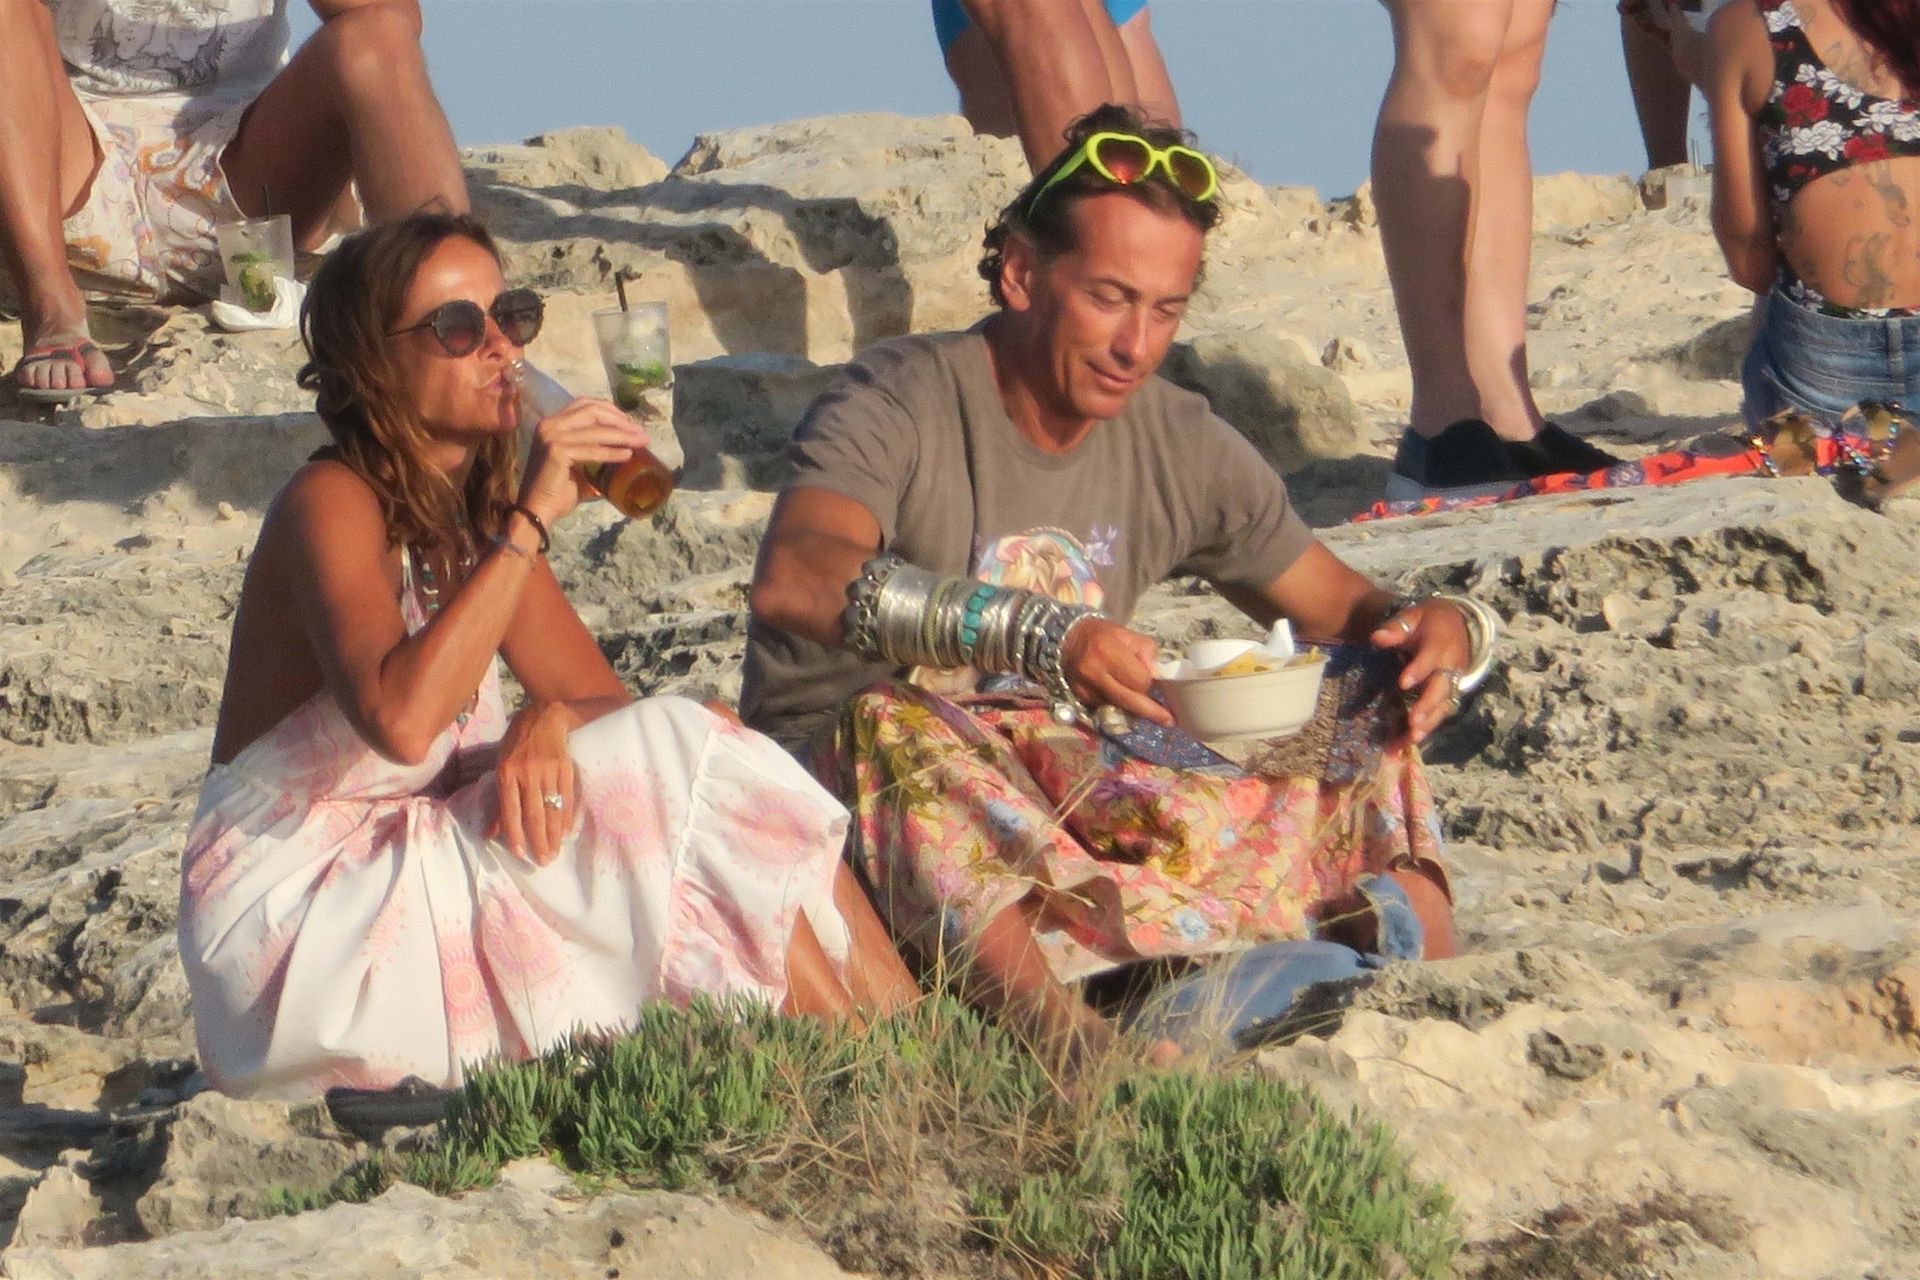 Soldano Kunz Enjoys a Nude Day on the Beach with Cristina Parodi in Formentera (35 Photos)